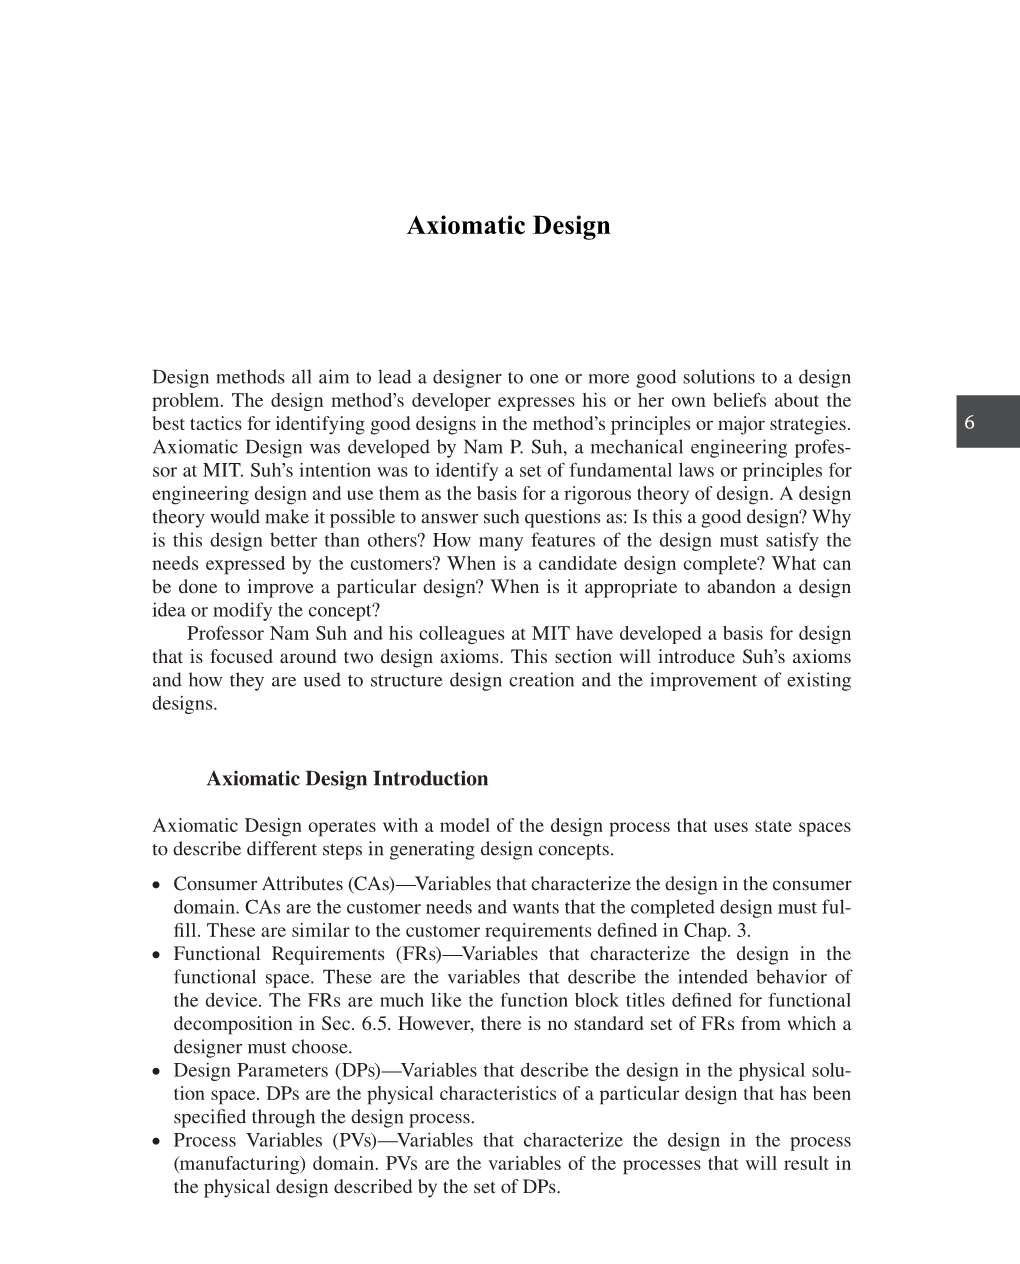 6.8.1 Axiomatic Design Introduction